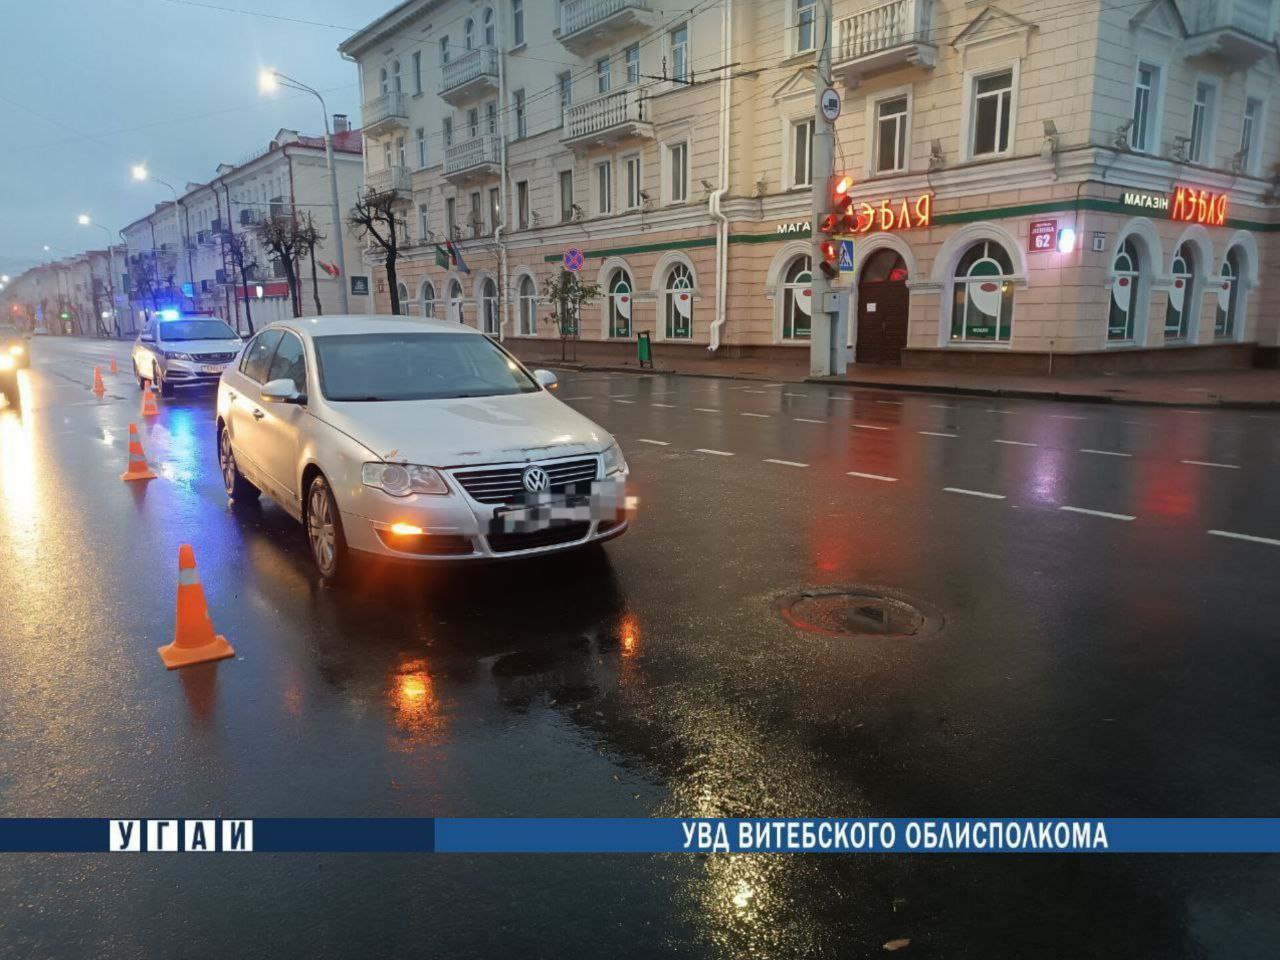 Сегодня утром в Витебске снова сбили женщину на пешеходном переходе. Фото ГАИ